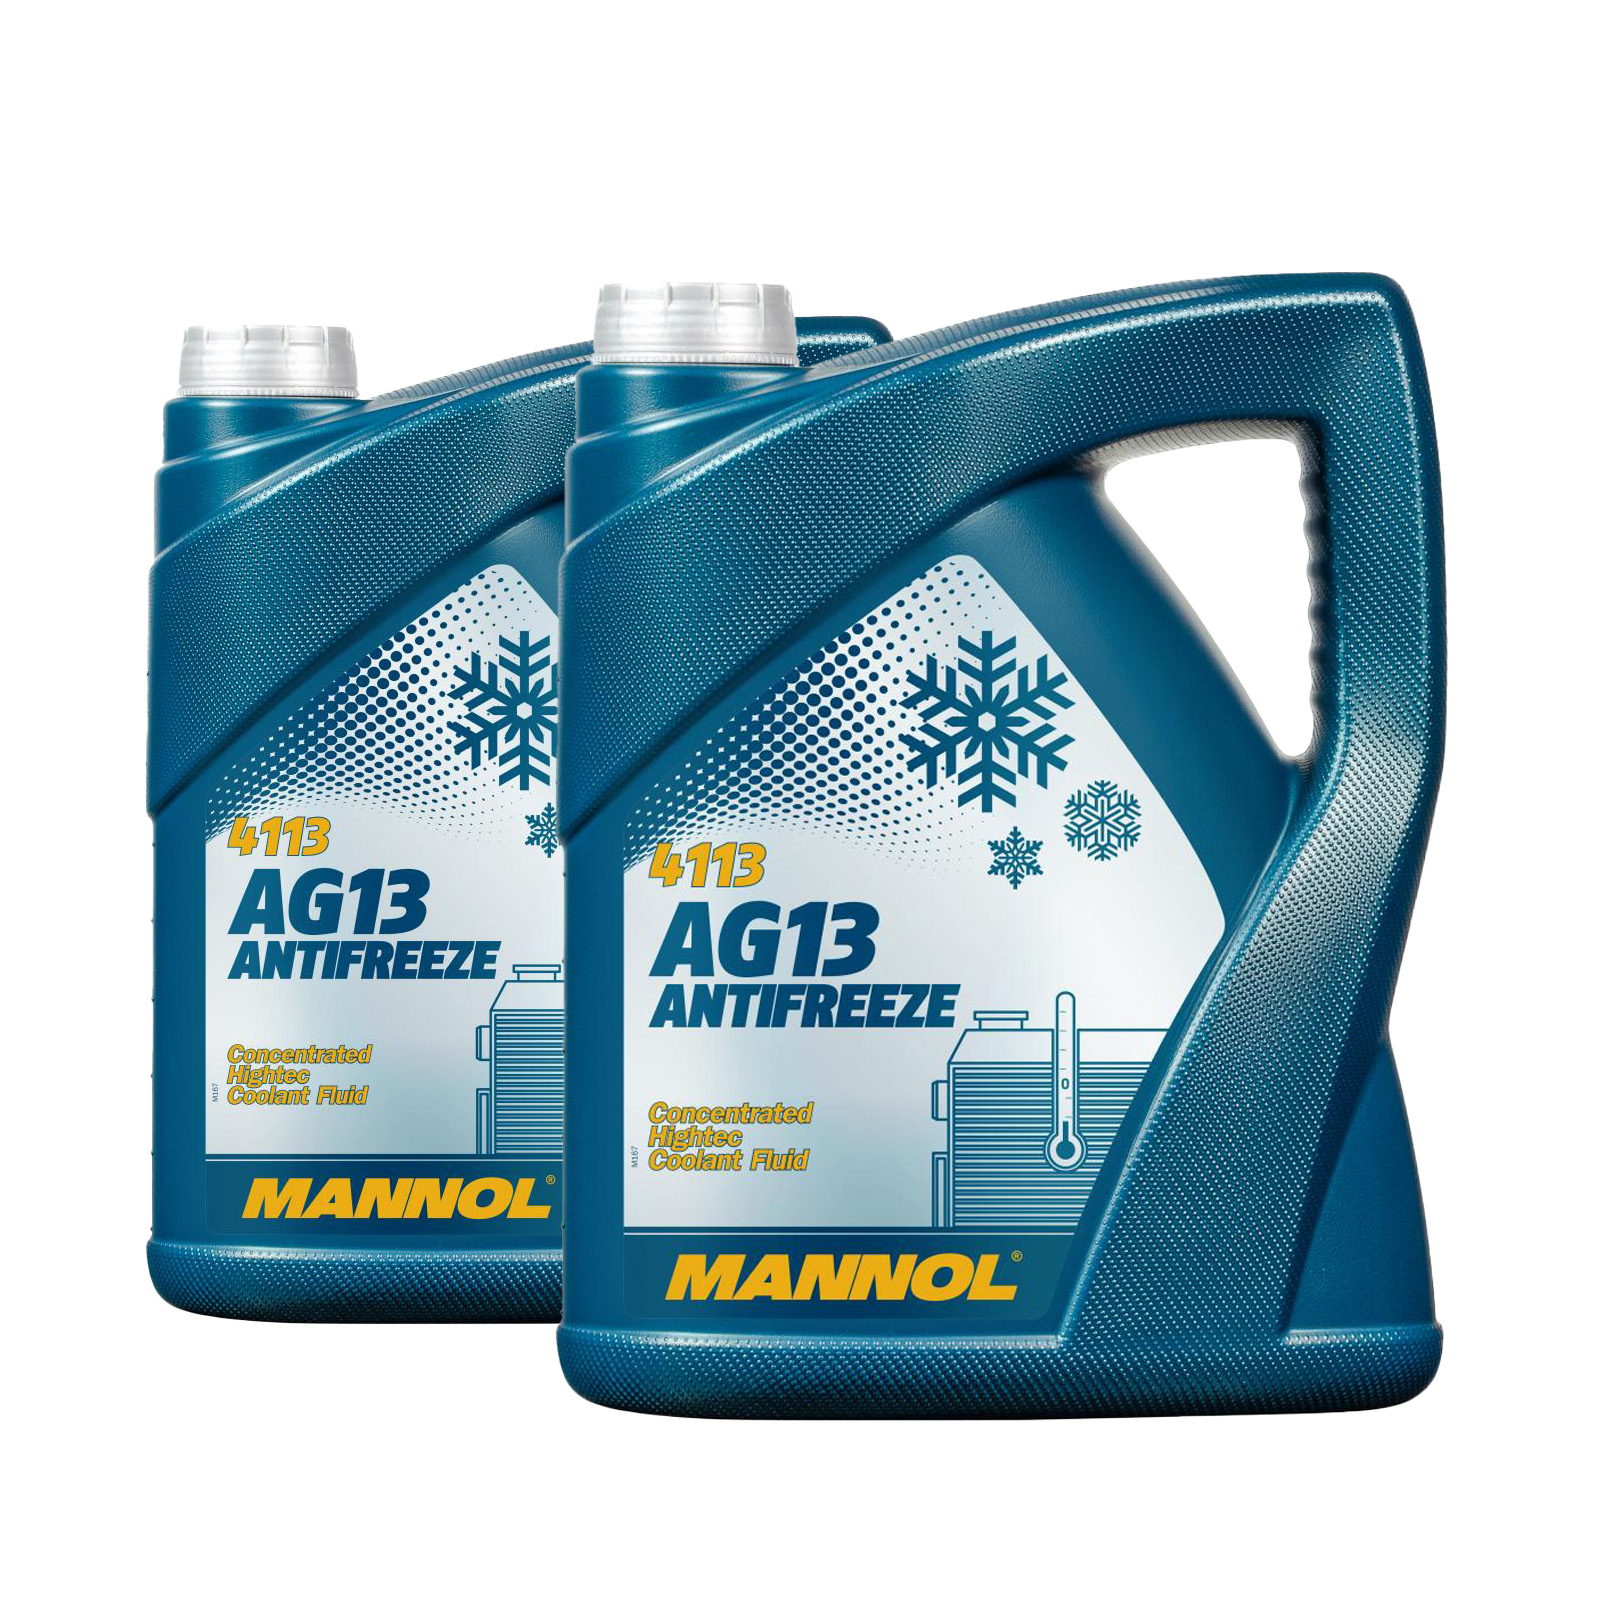 10 Liter (2x5) MANNOL hightech Antifreeze AG13 Frostschutz Konzentrat grün -40°C G13